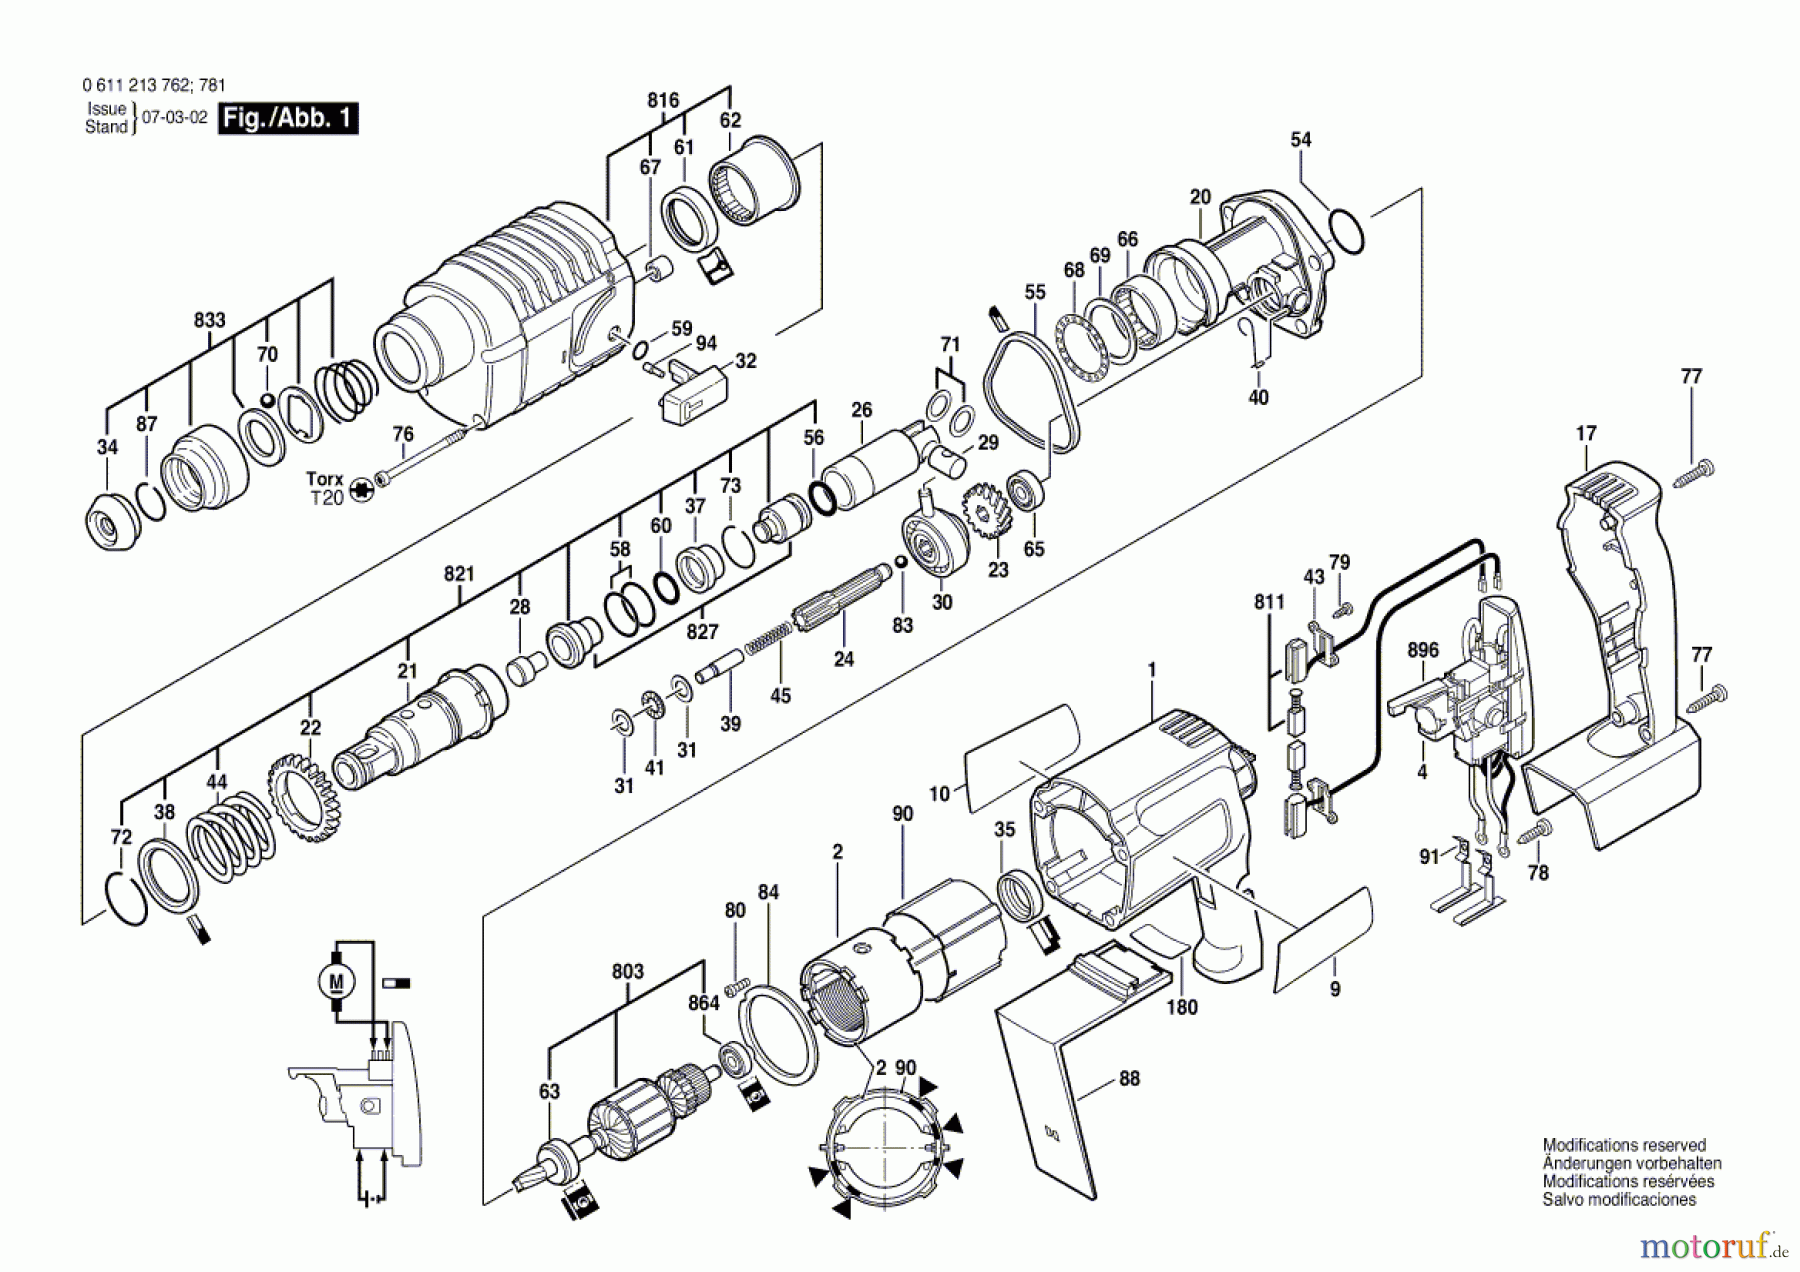  Bosch Akku Werkzeug Gw-Akku-Bohrhammer 524 V Seite 1